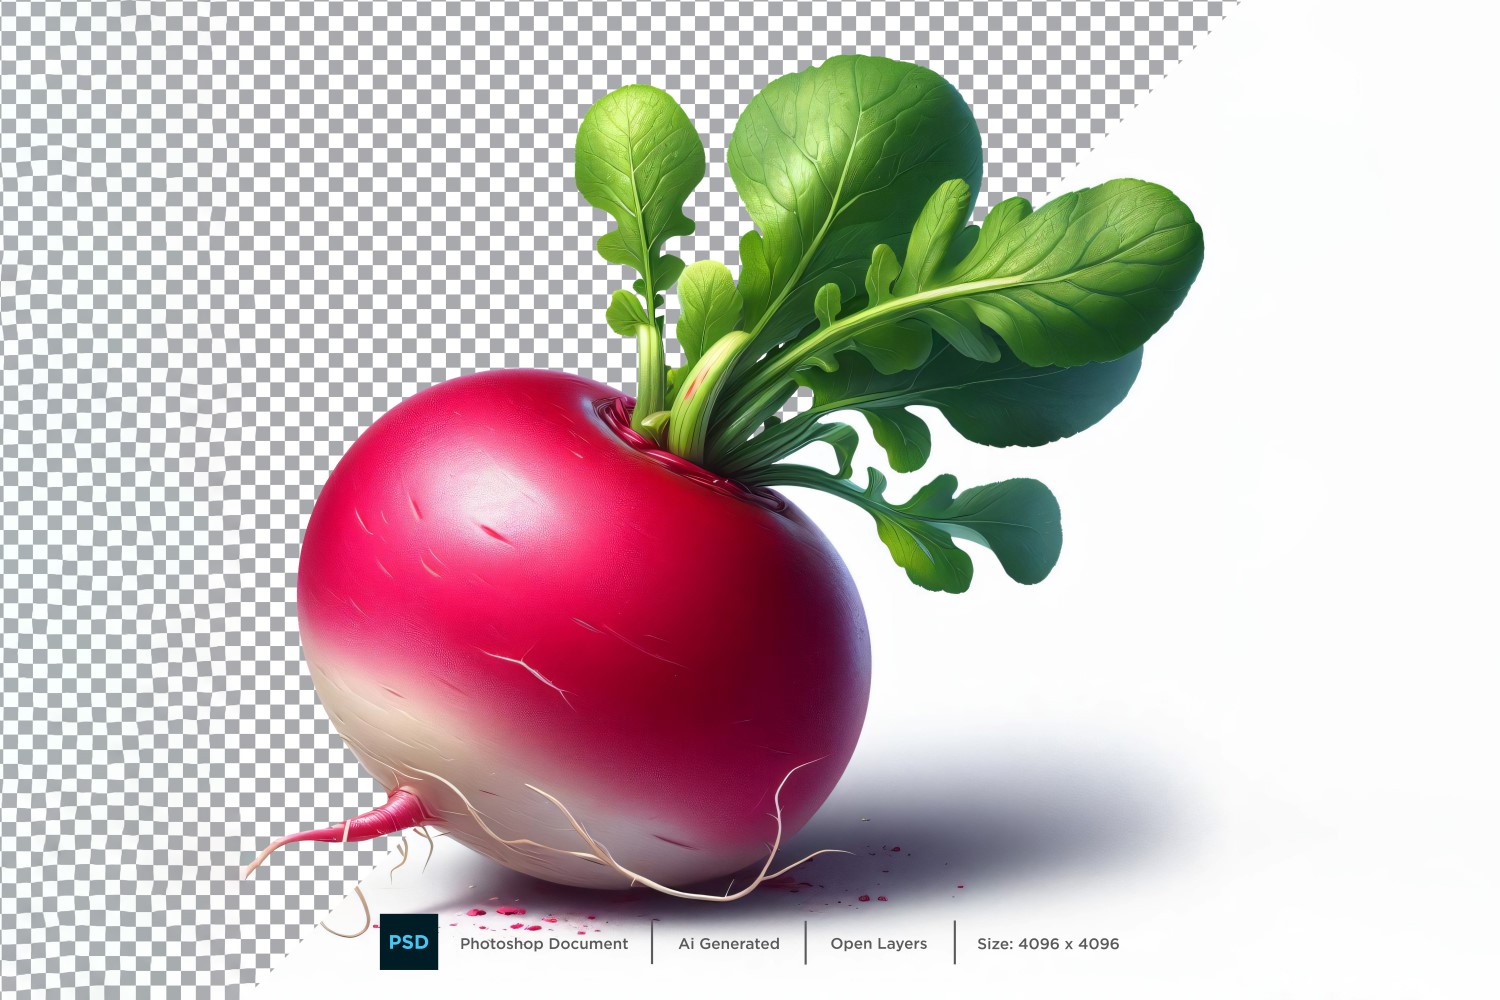 Radish Fresh Vegetable Transparent background 08